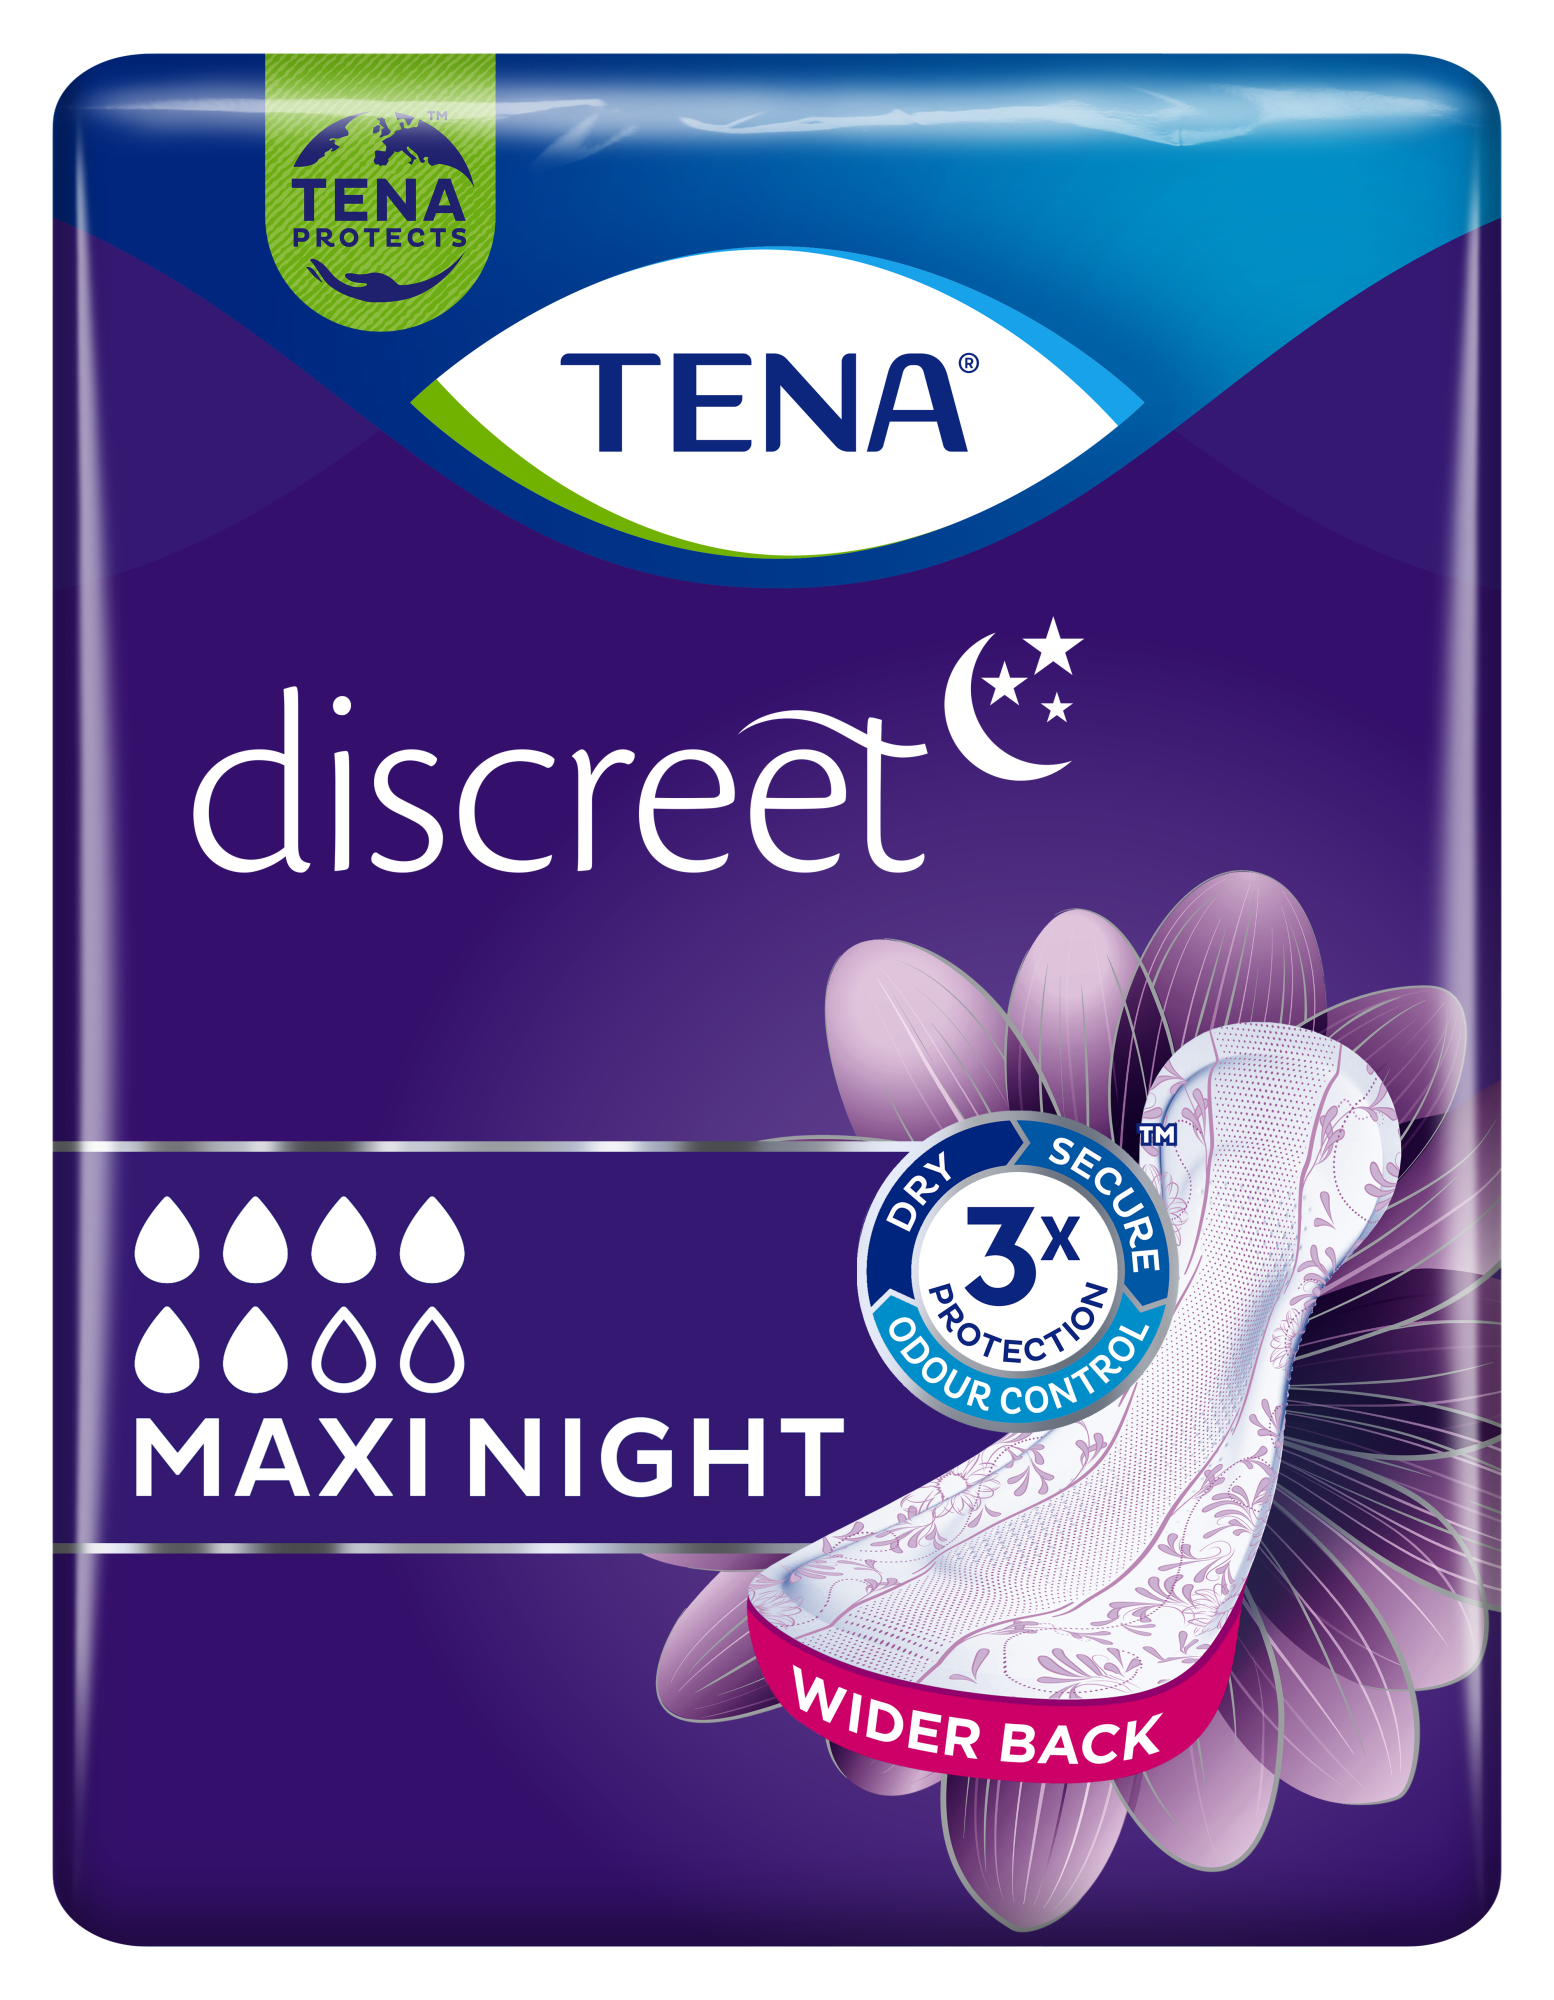 https://tena-images.essity.com/images-c5/326/248326/optimized-AzurePNG2K/tena-discreet-night-pads-maxi-night.png